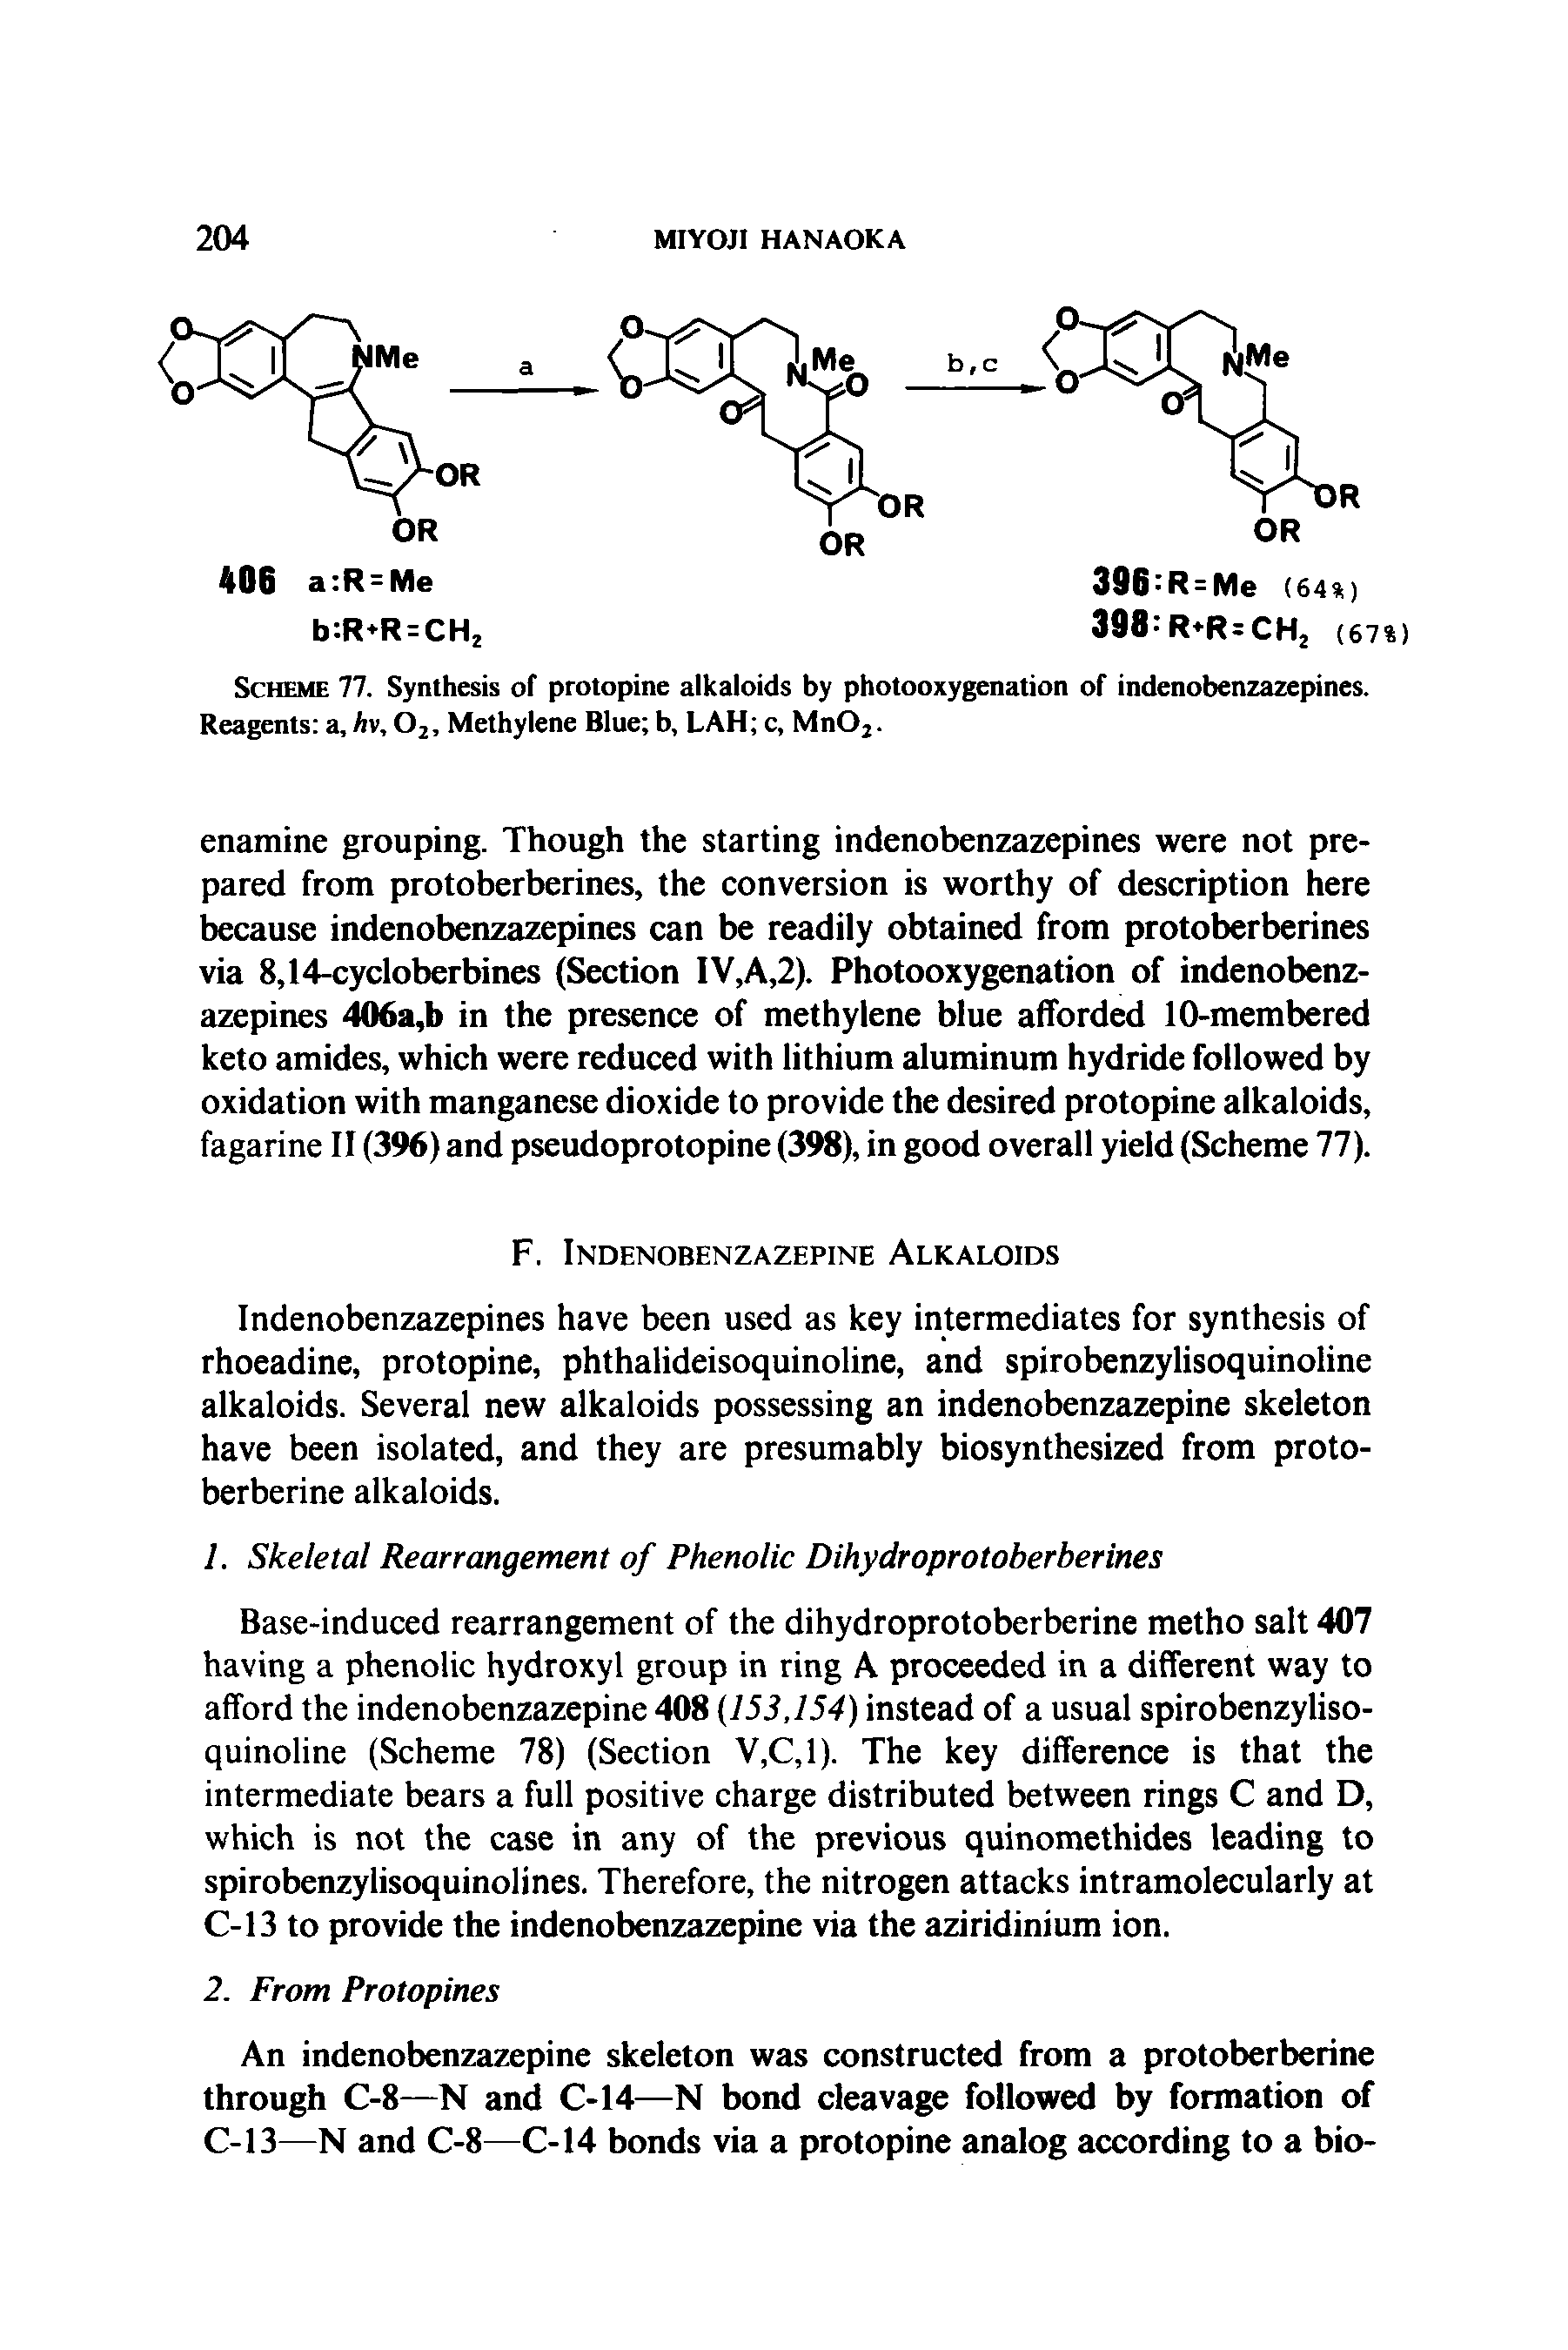 Scheme 77. Synthesis of protopine alkaloids by photooxygenation of indenobenzazepines. Reagents a, hv, 02, Methylene Blue b, LAH c, Mn02.